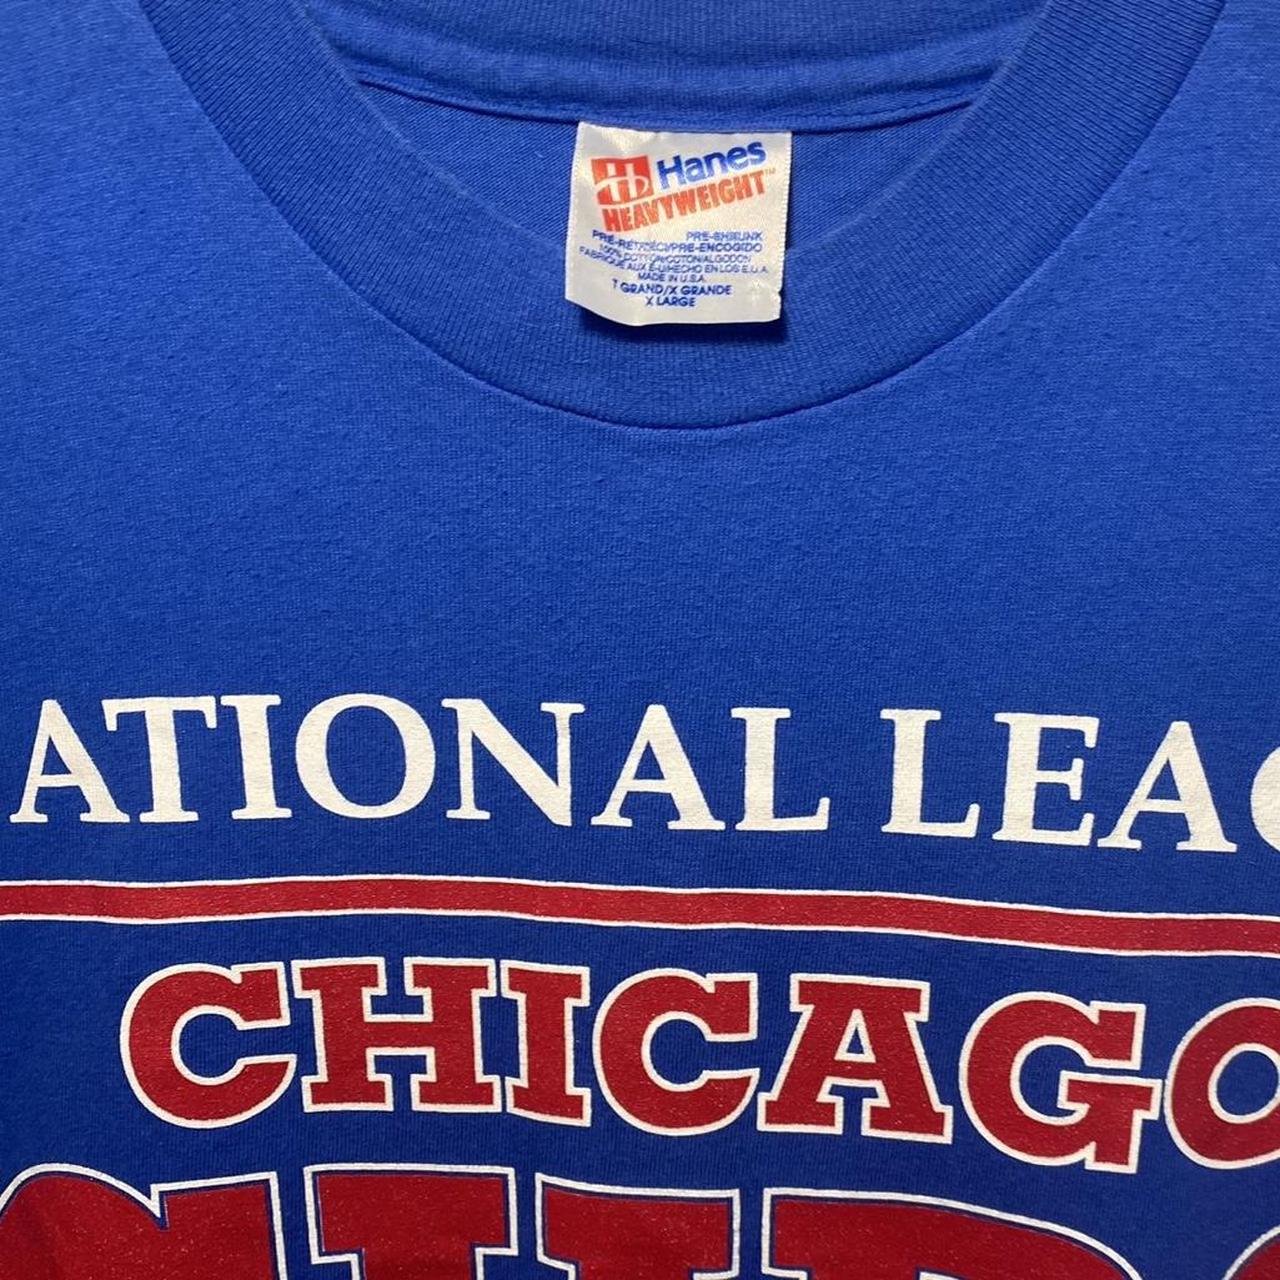 1992 Chicago Cubs T-Shirt Early 90s Vintage MLB, - Depop